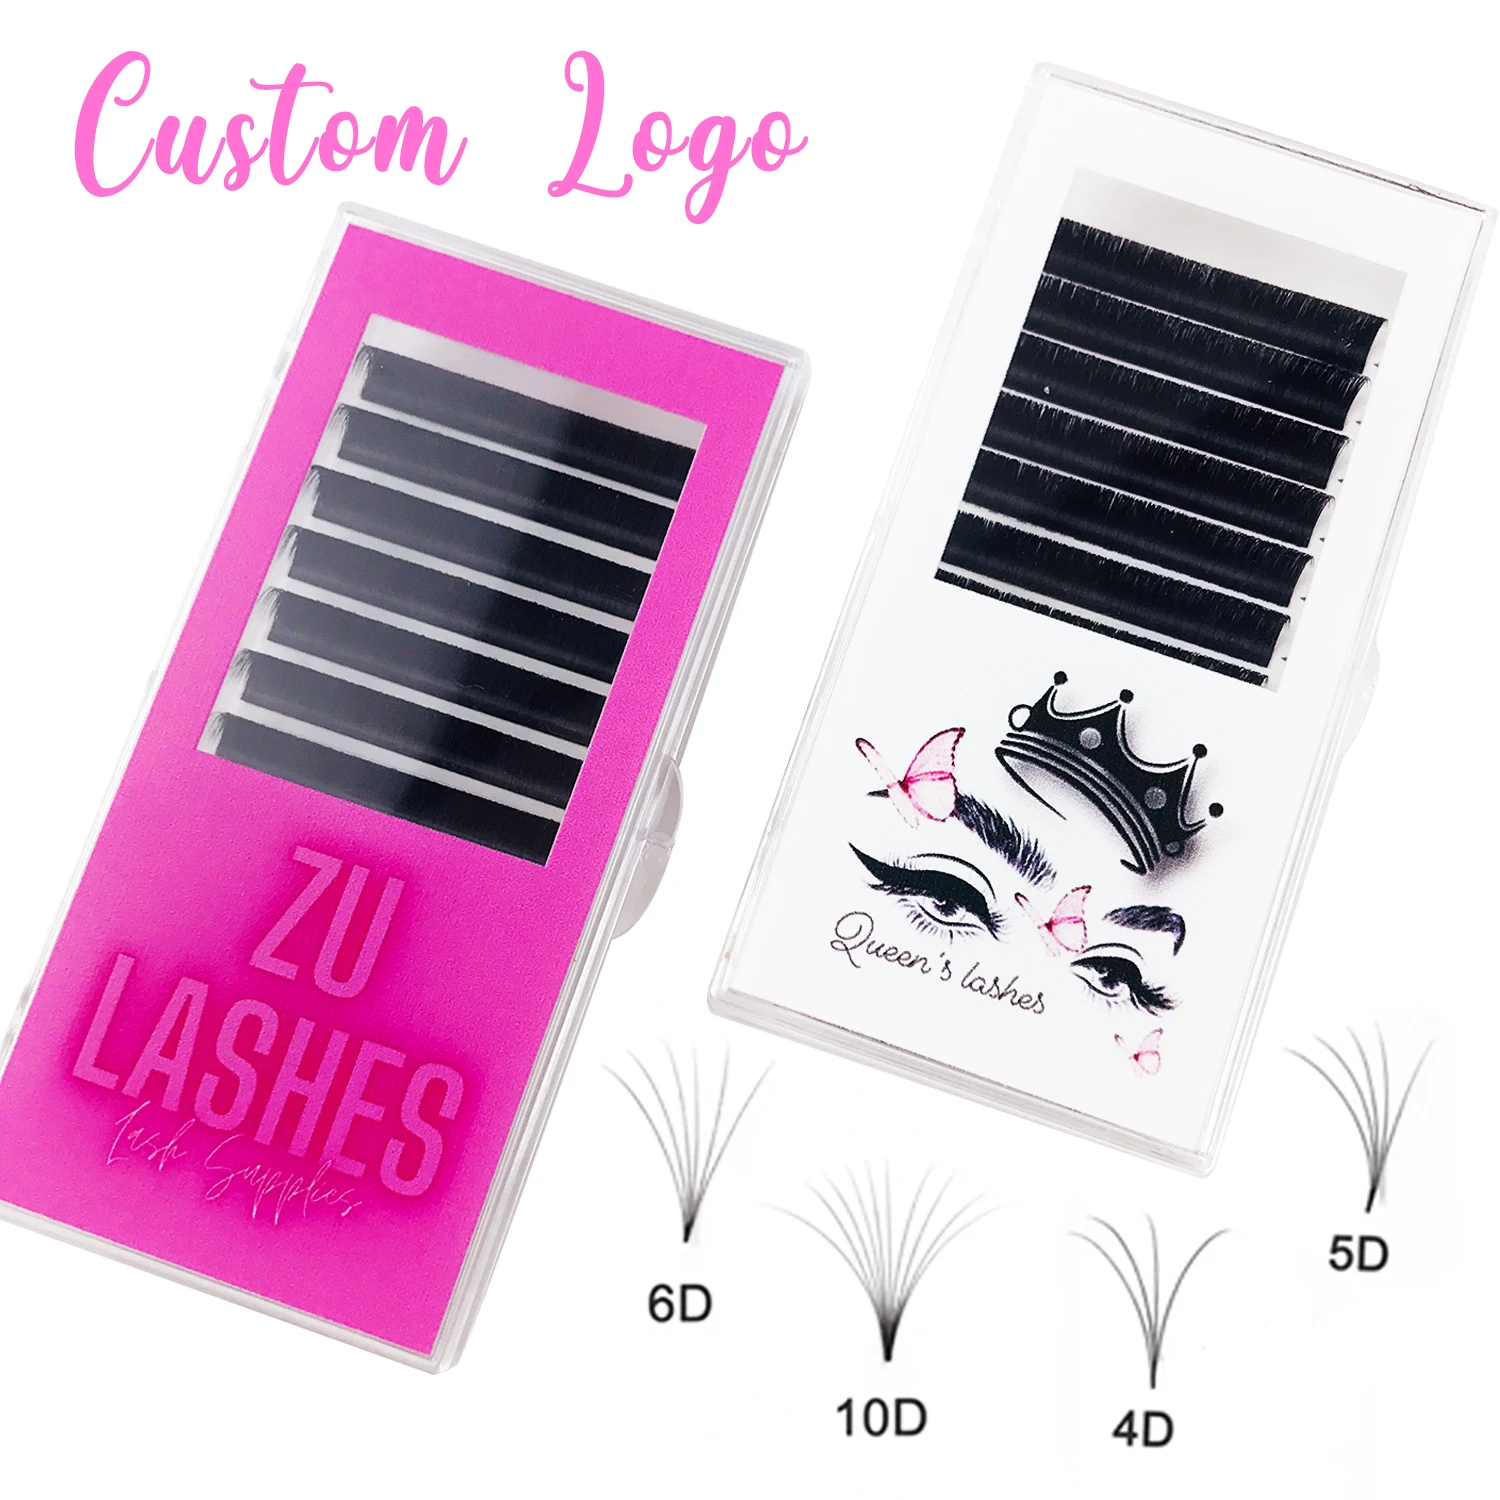 comango-custom-brand-label-10-20-30pcs-easy-fan-lashes-volume-extensions-with-your-own-logo-wholesale-auto-flower-1-second-lash